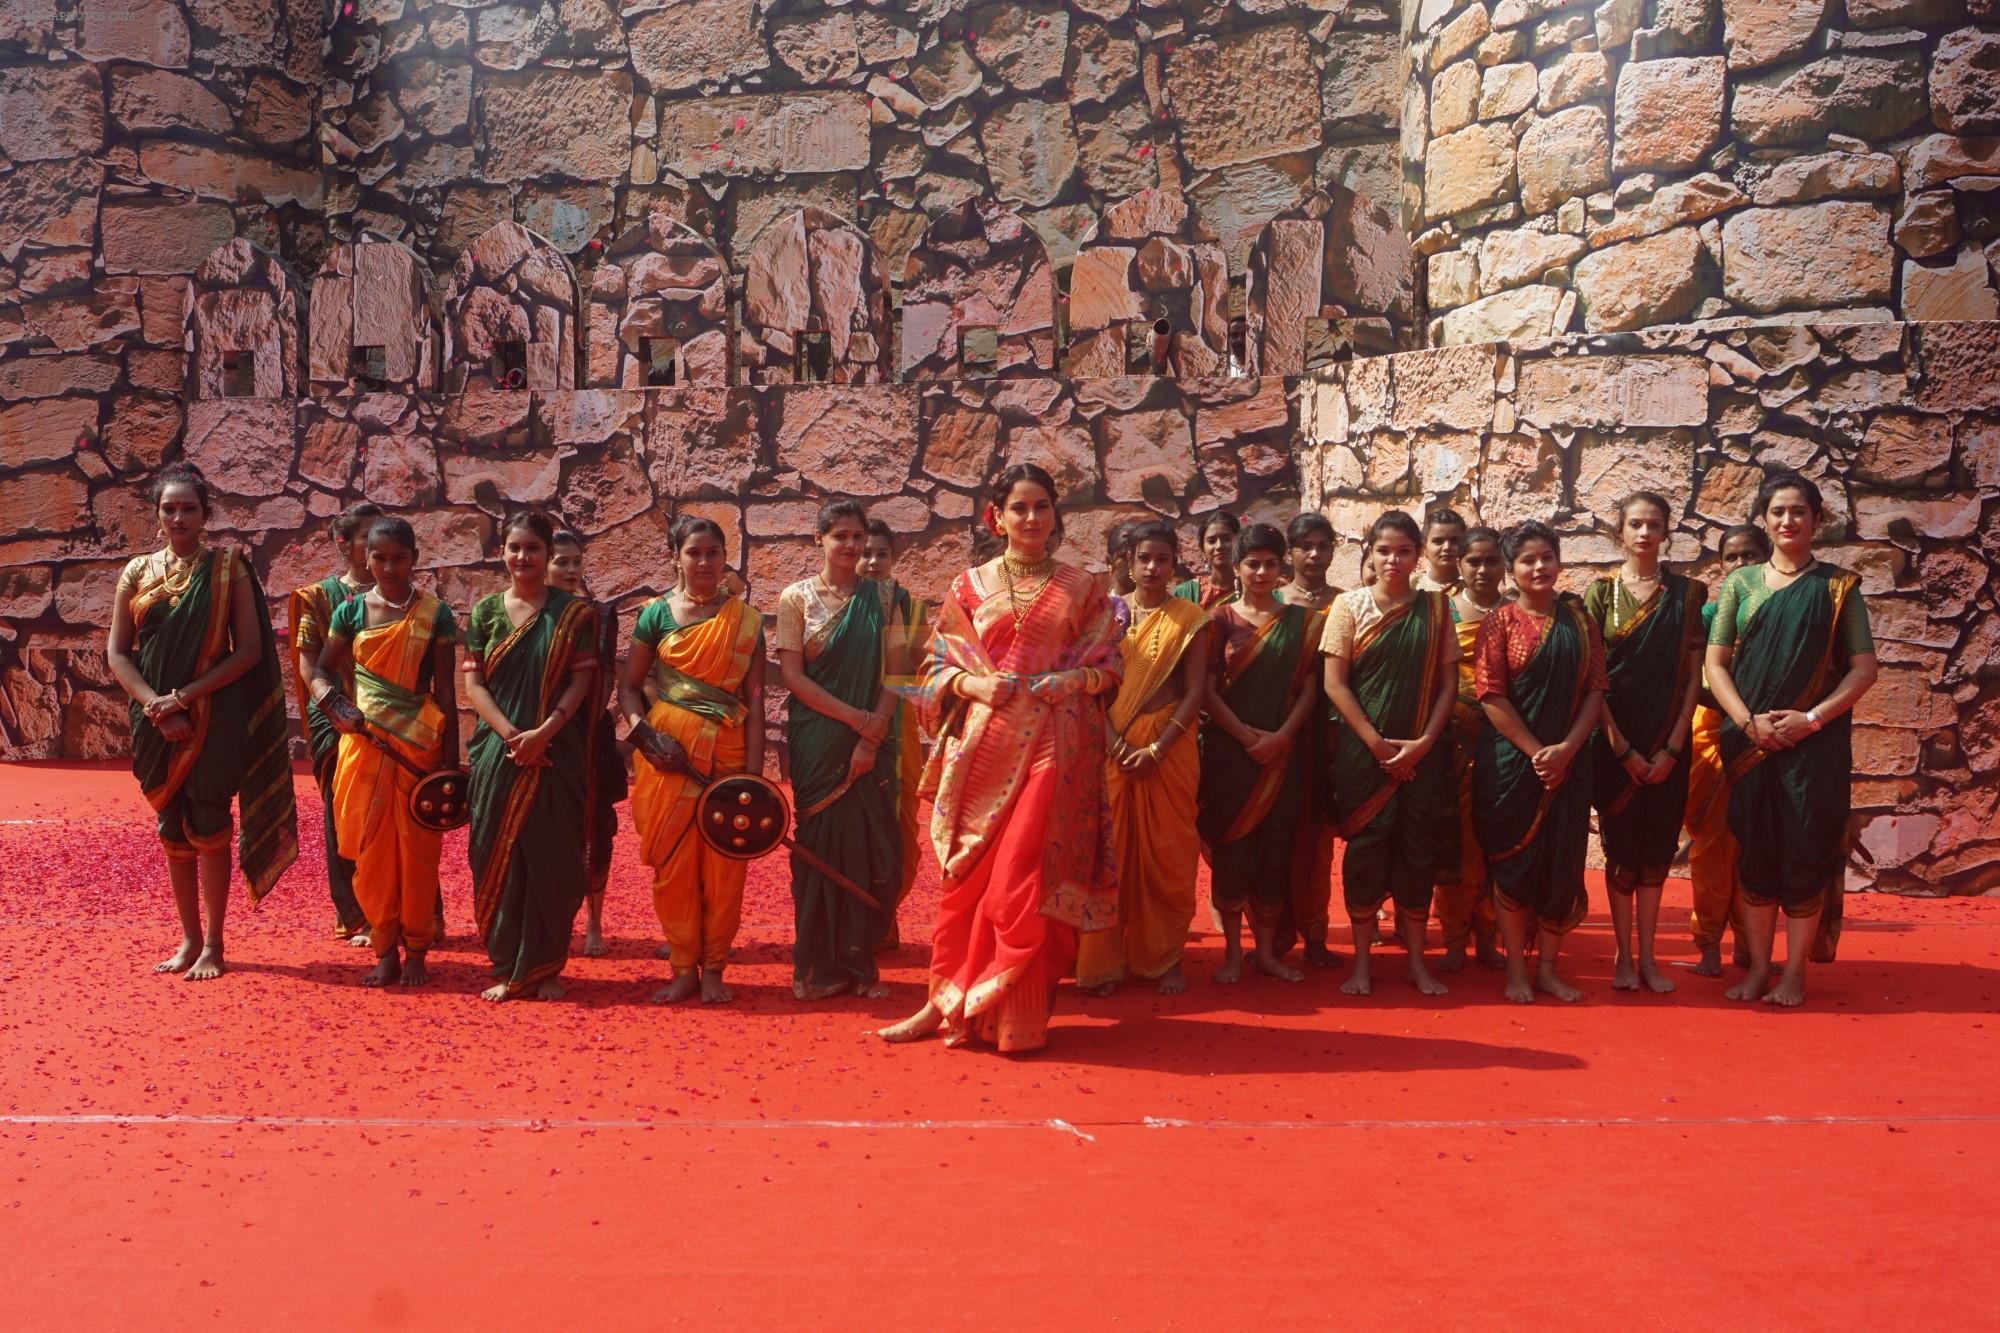 Kangana Ranaut At the Trailer Launch Of Film Manikarnika The Queen Of Jhansi on 18th Dec 2018